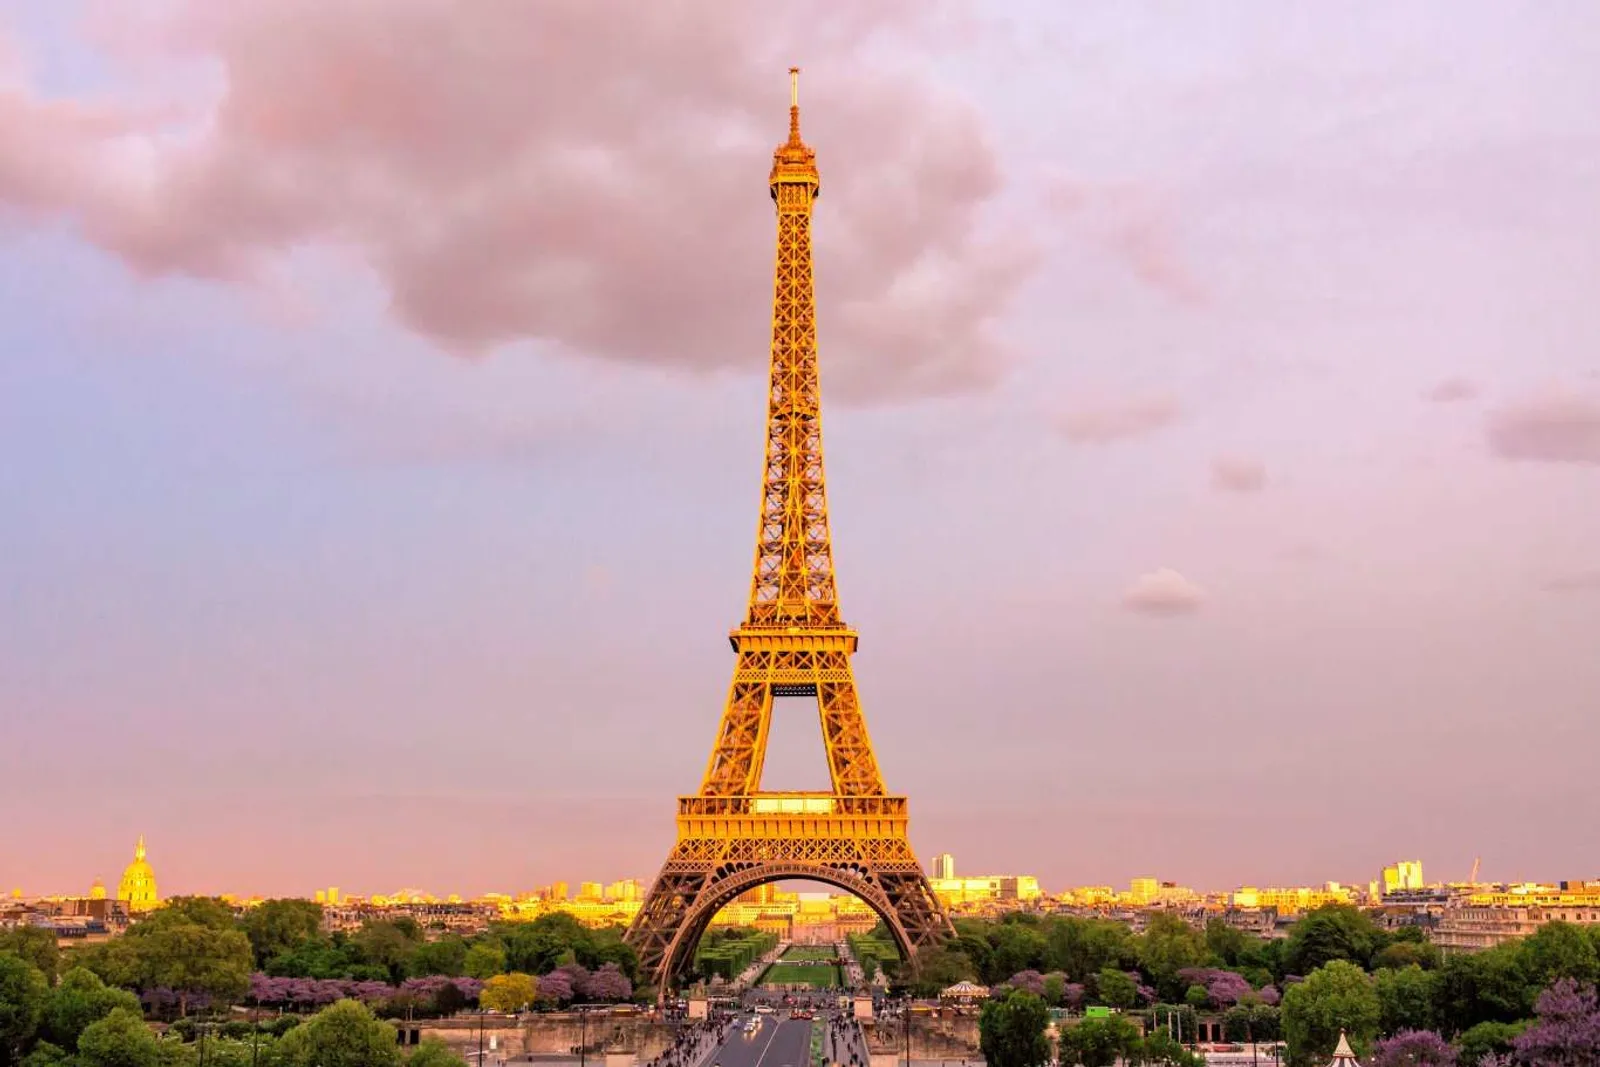 Pelanggaran! Mengunggah Gambar Eiffel di Media Sosial Menyalahi Hukum?